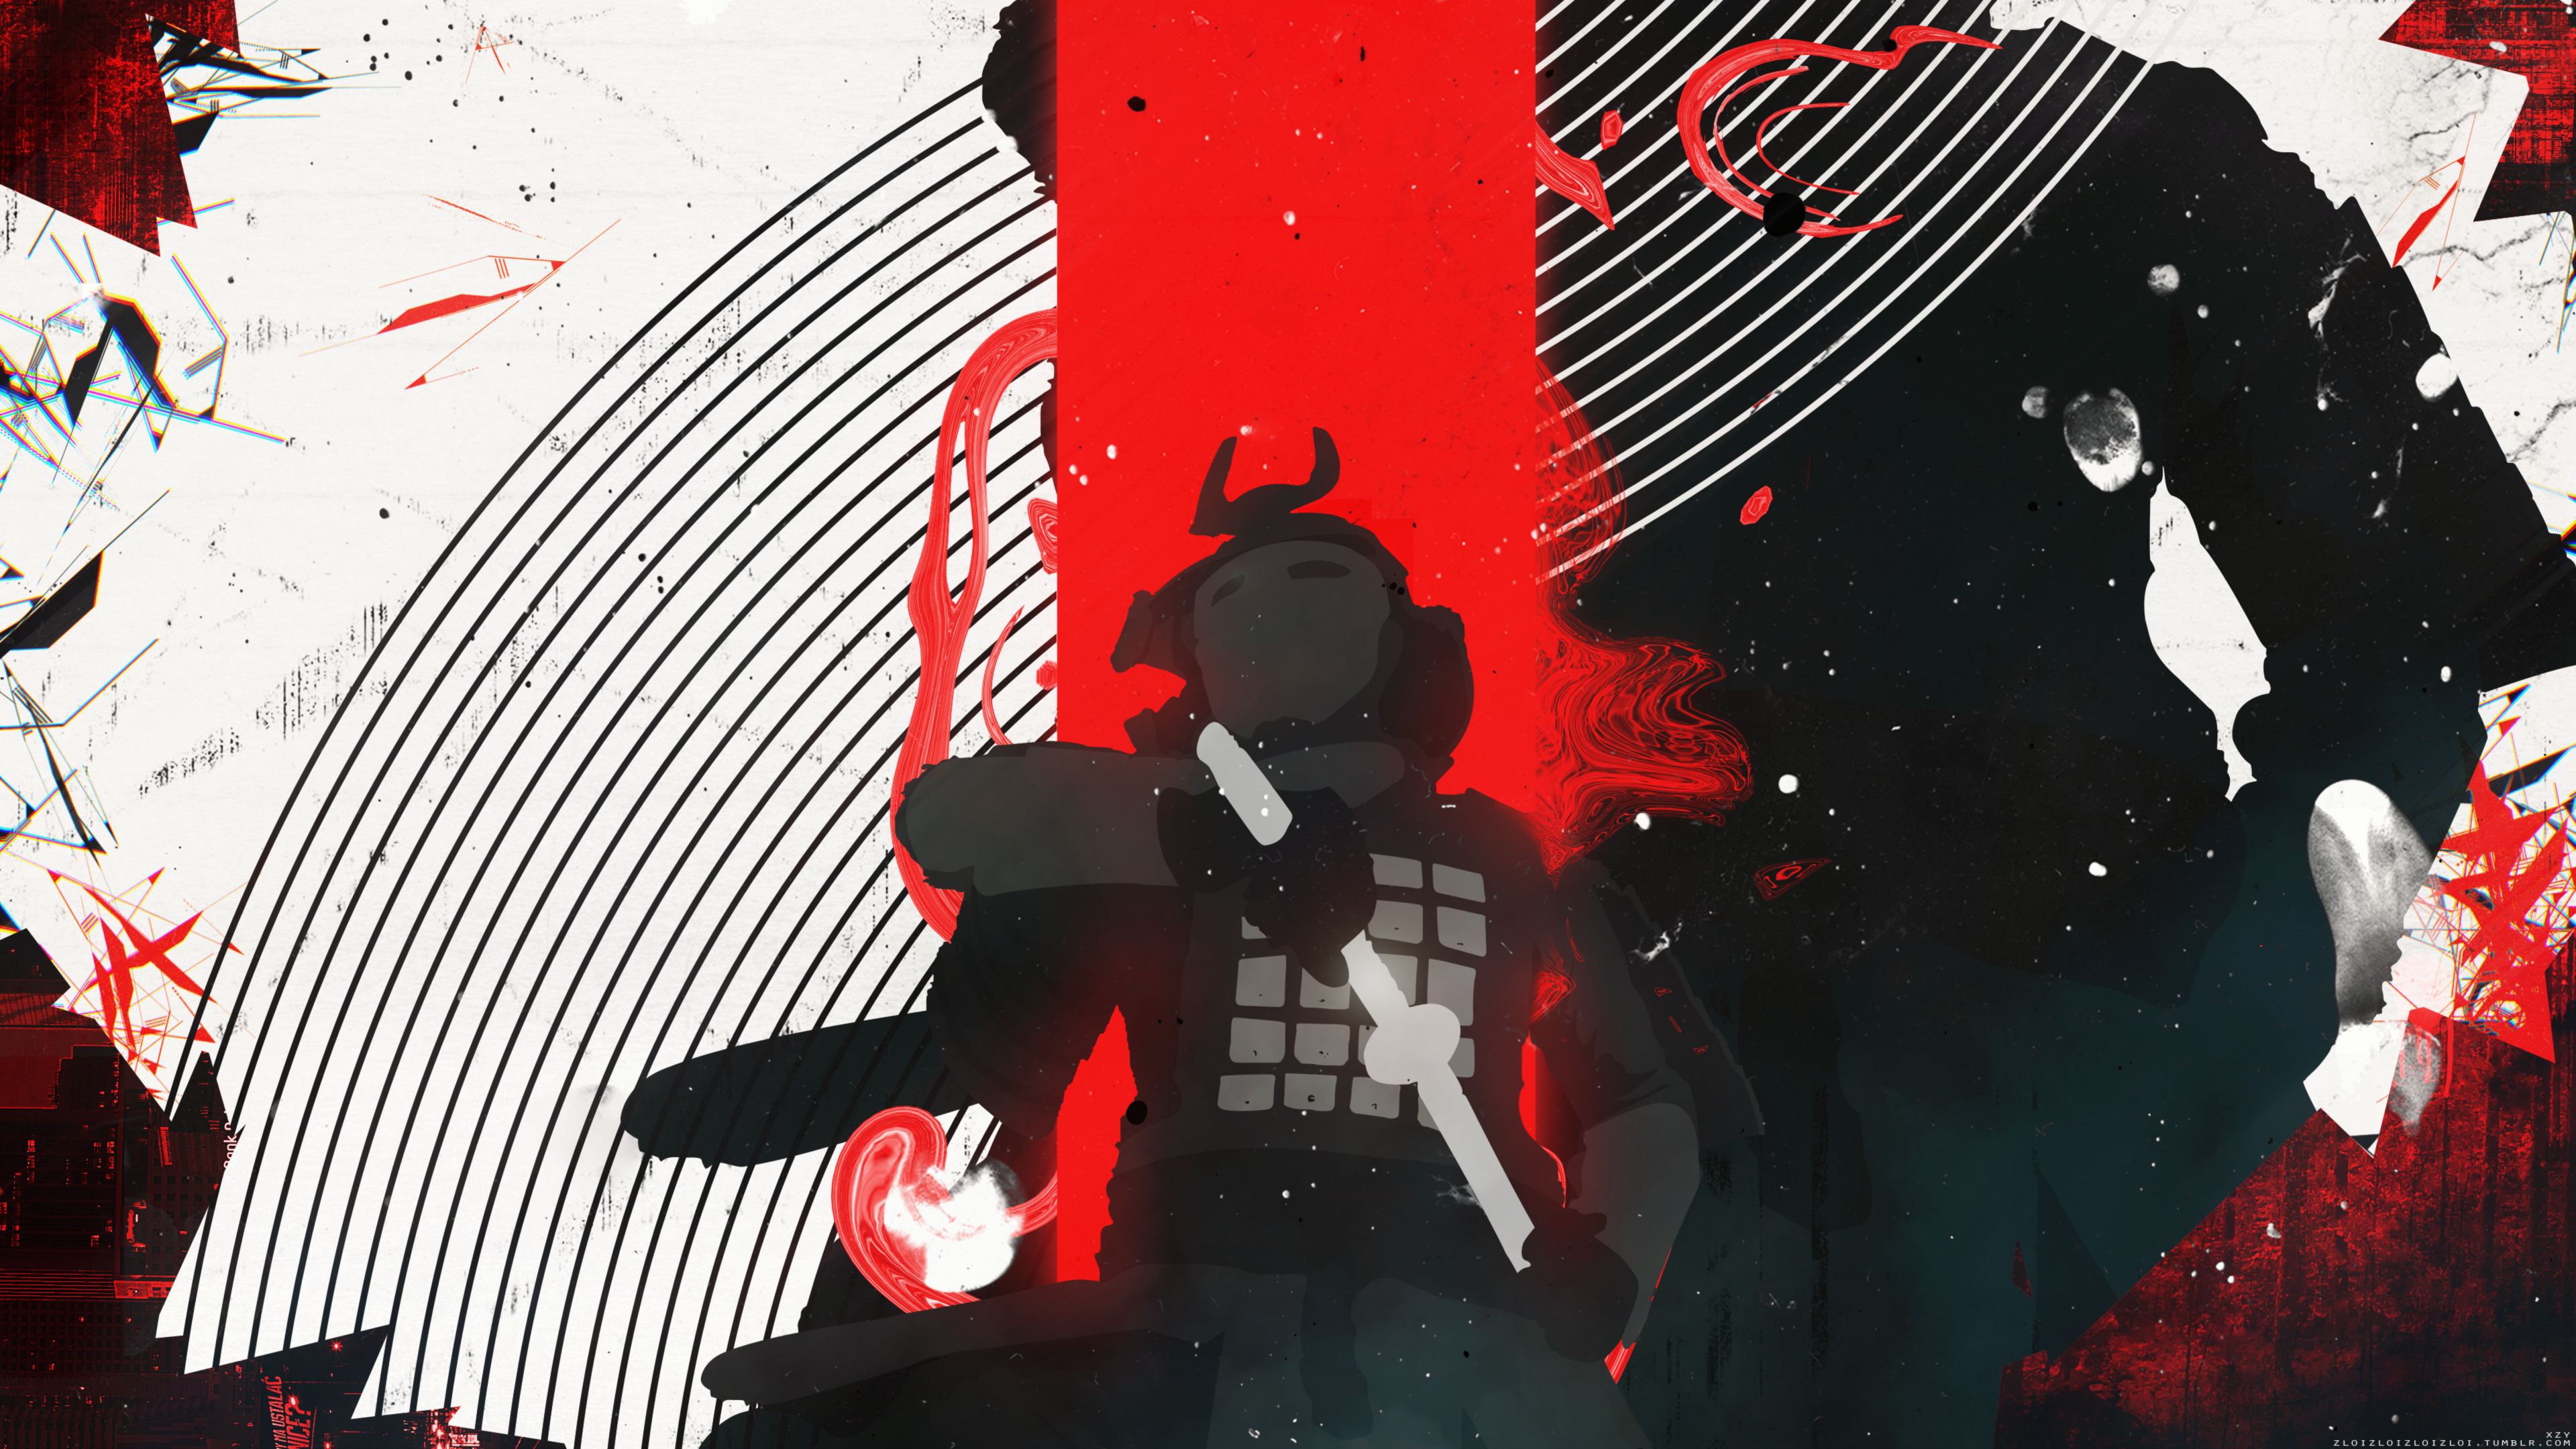 General 3840x2160 glitch art samurai Japan abstract red cyberpunk